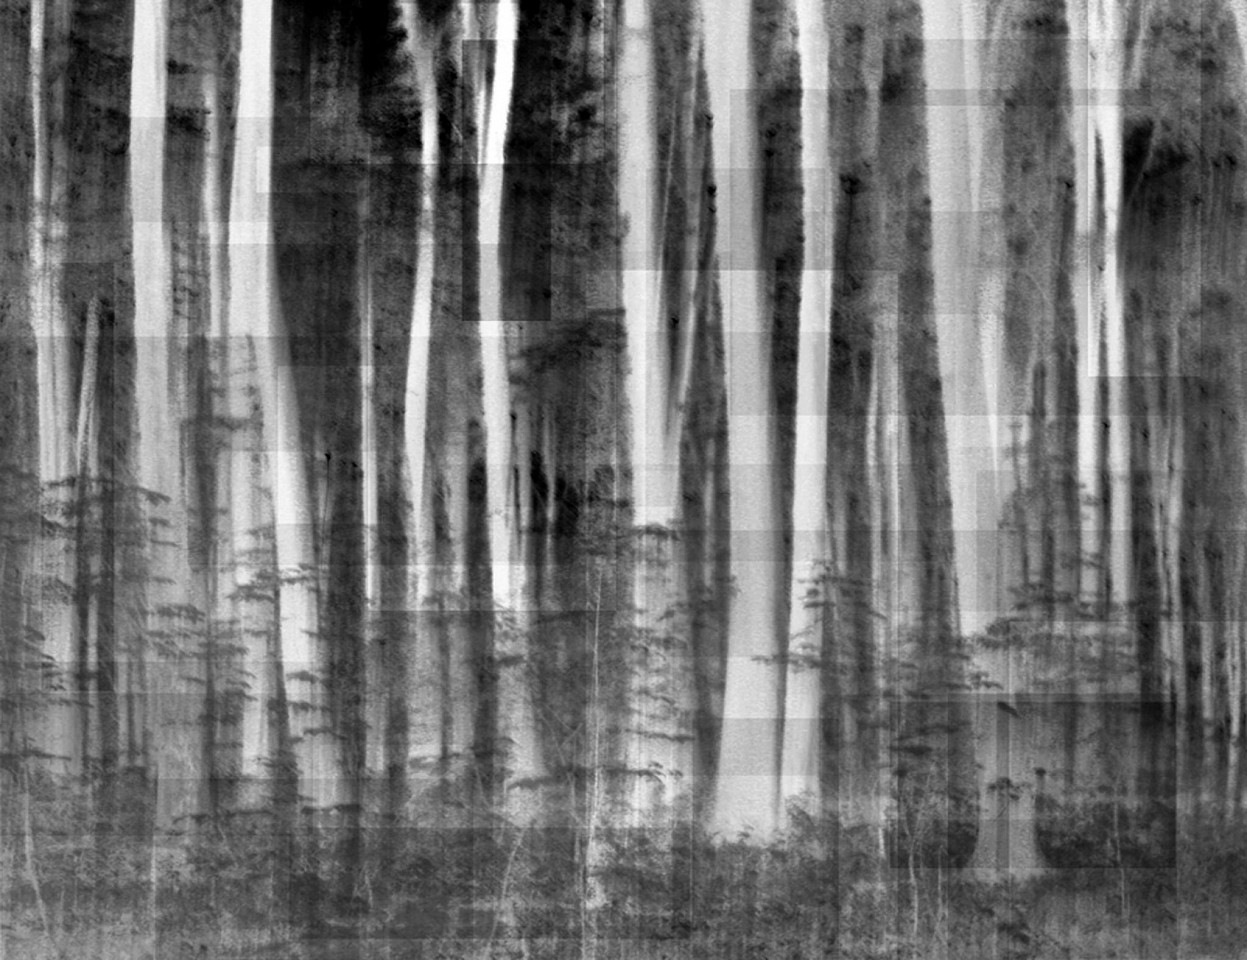 LUIS PAREDES, Natural Environment, 2011
photo impression on canvas, 19 5/8 x 25 5/8 in. (50 x 65 cm)
ed: 2/5
LP-C-0001